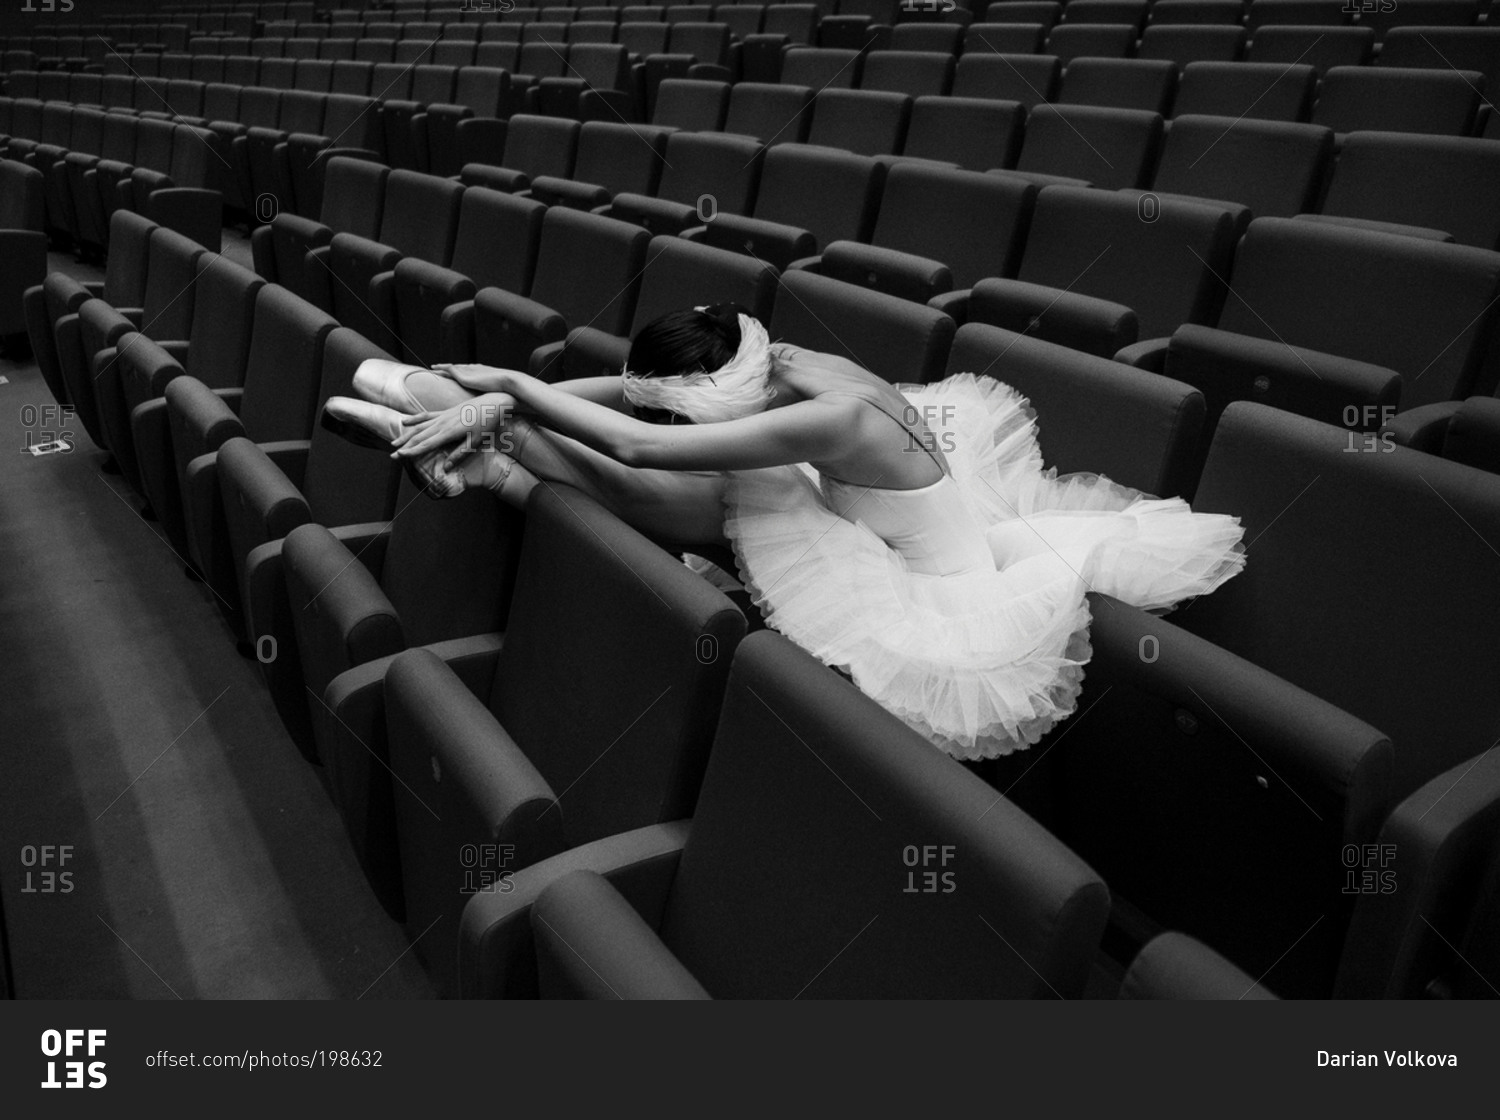 Costumed ballet dancer resting in theater seats